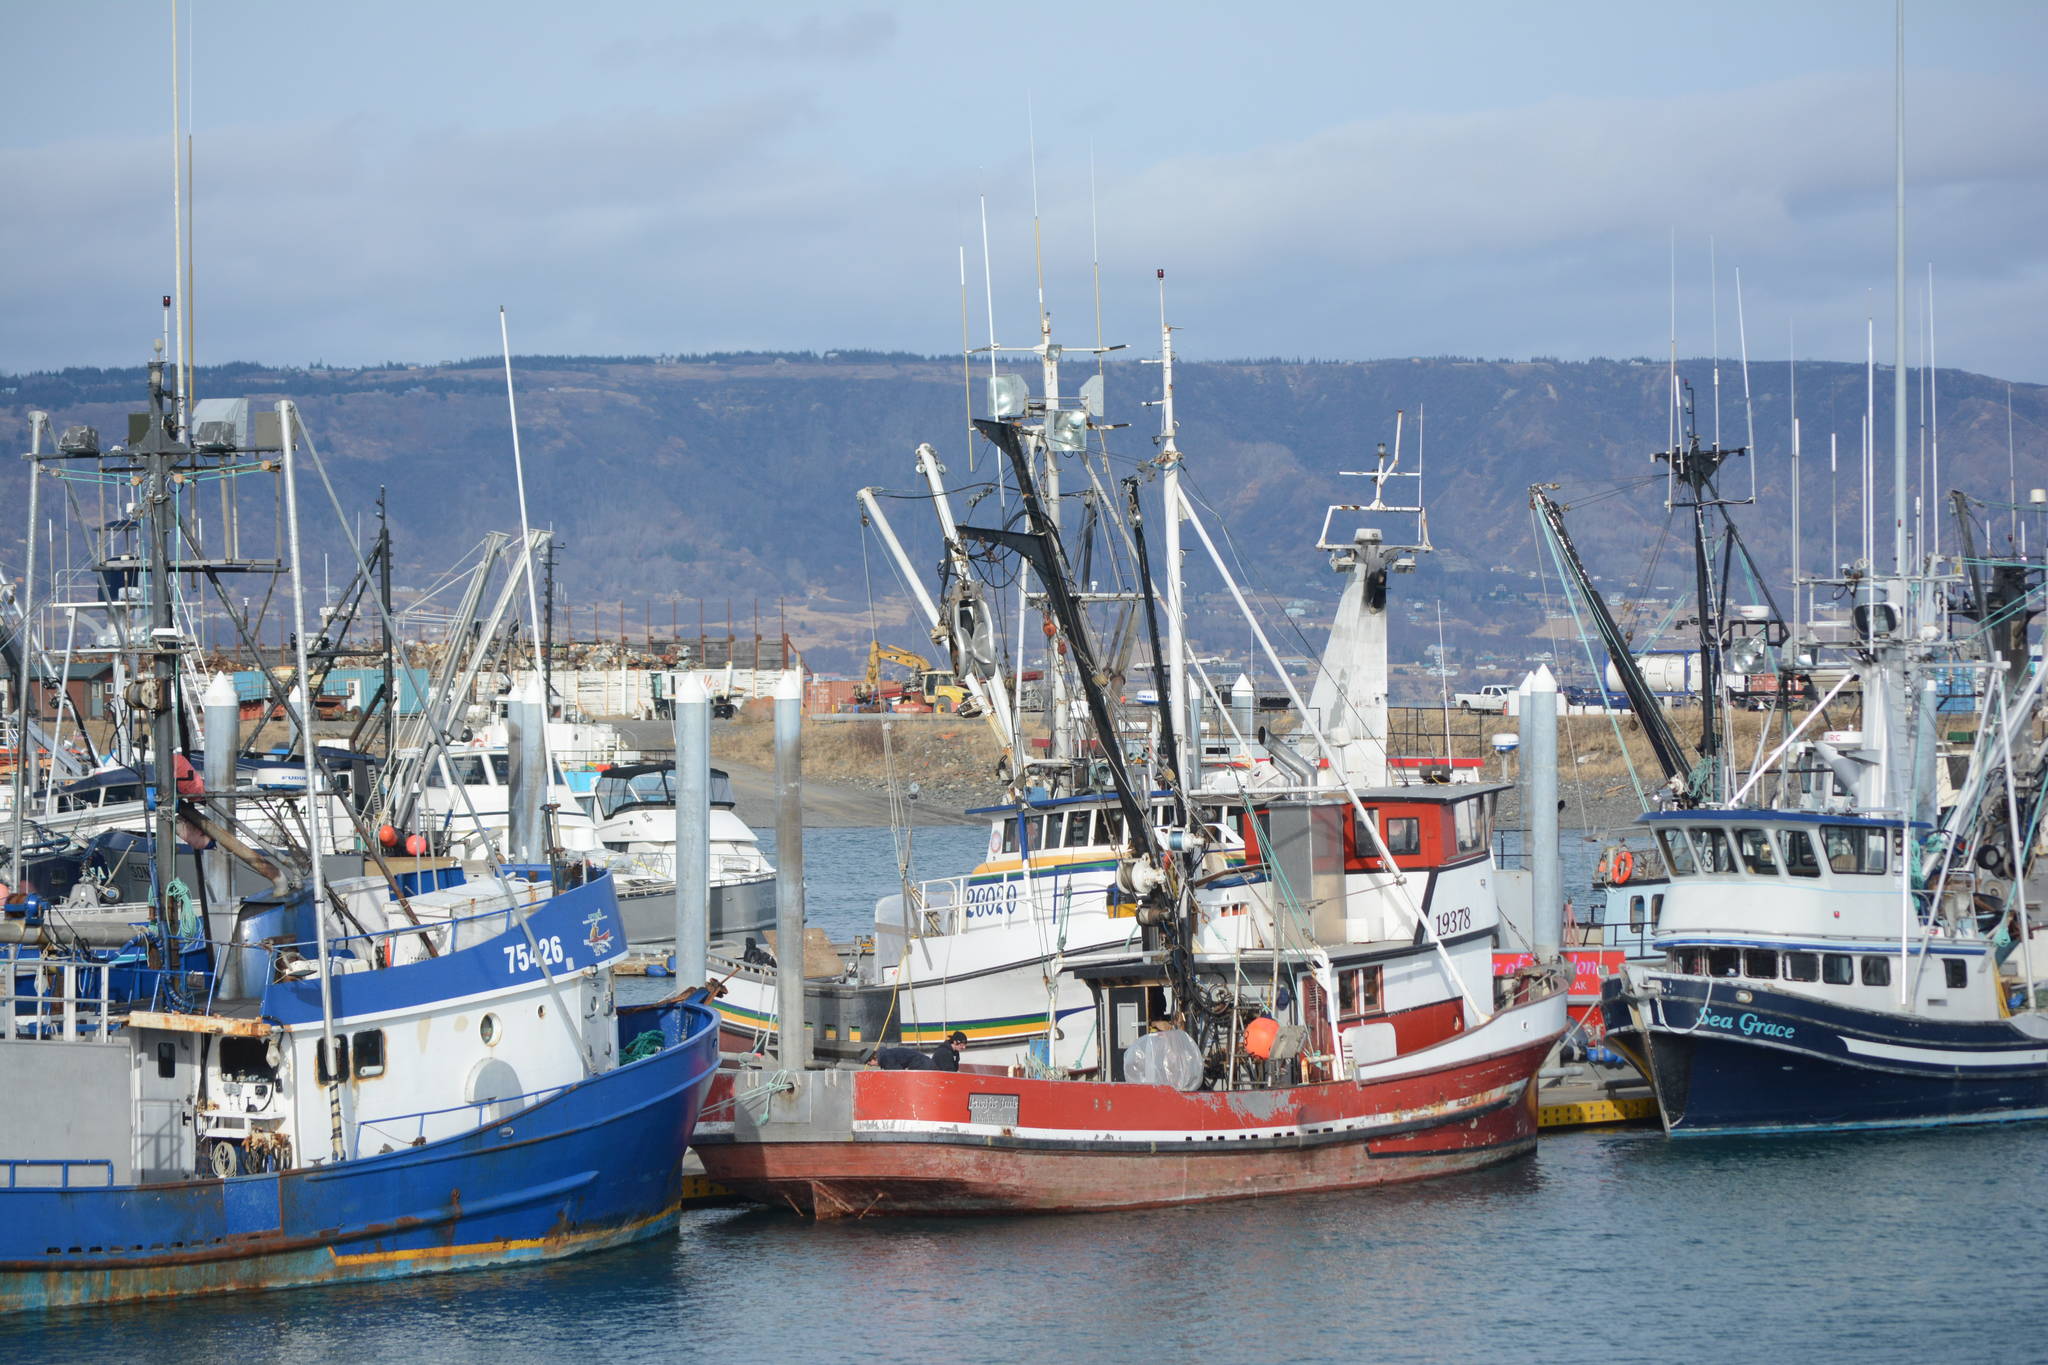 Seawatch: Senate candidates debate fisheries issues